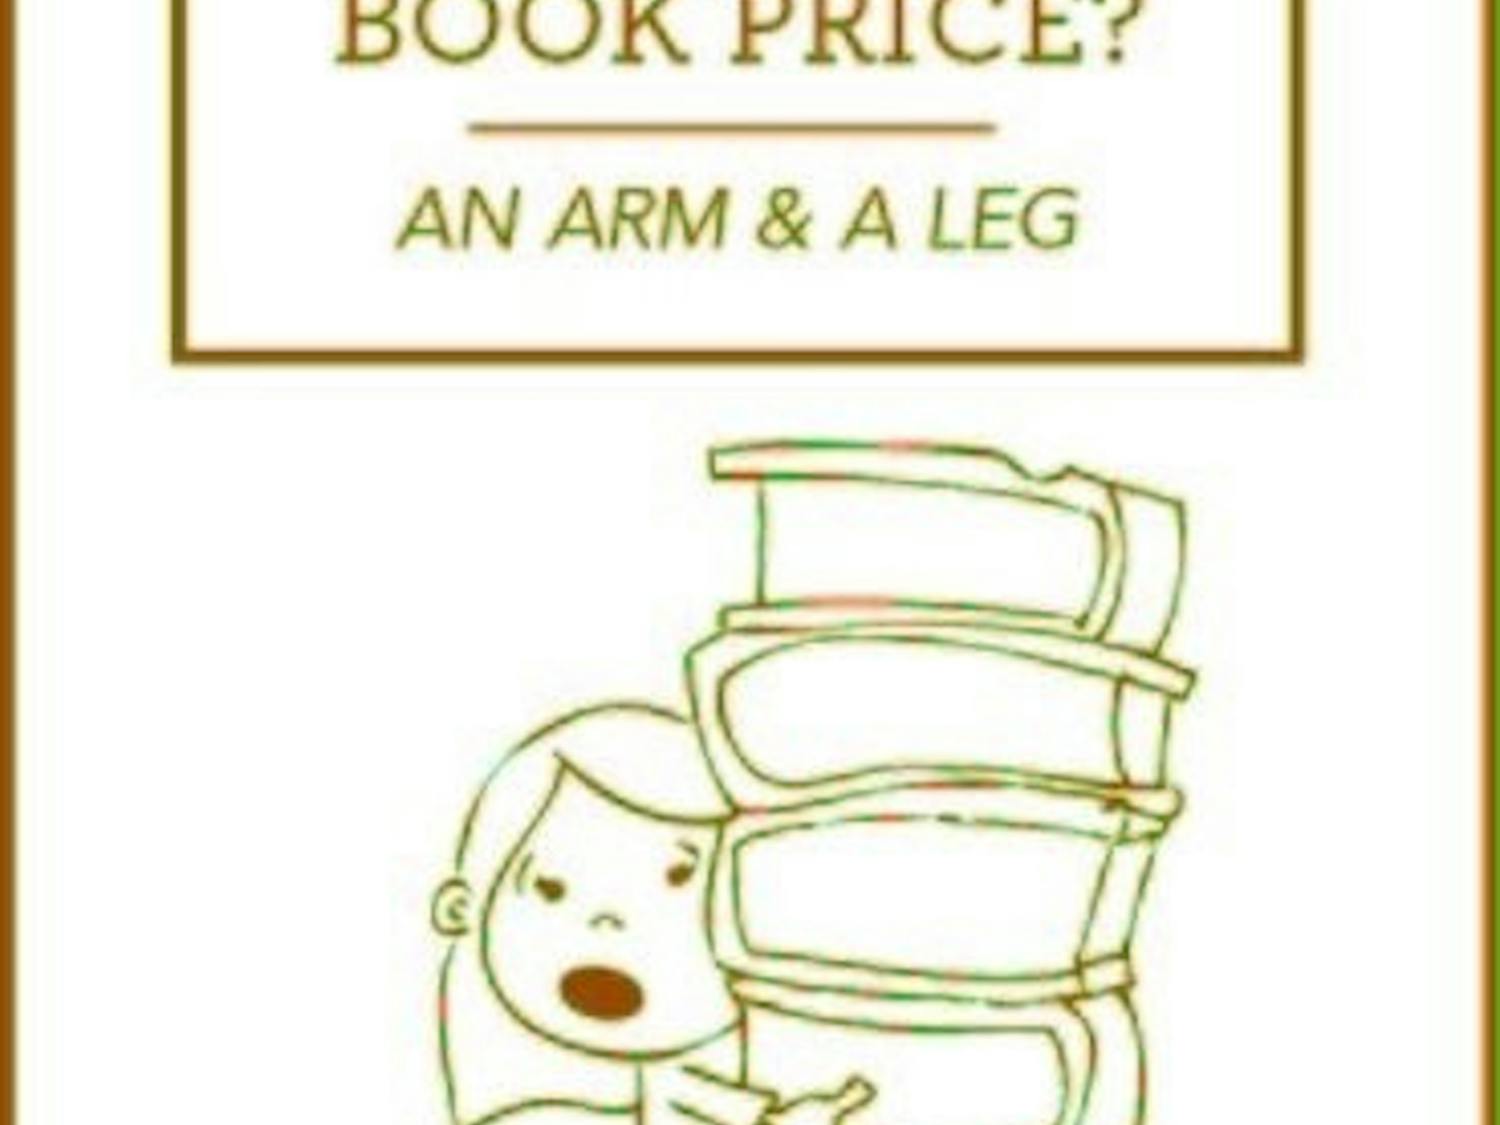 editorial cartoon book prices